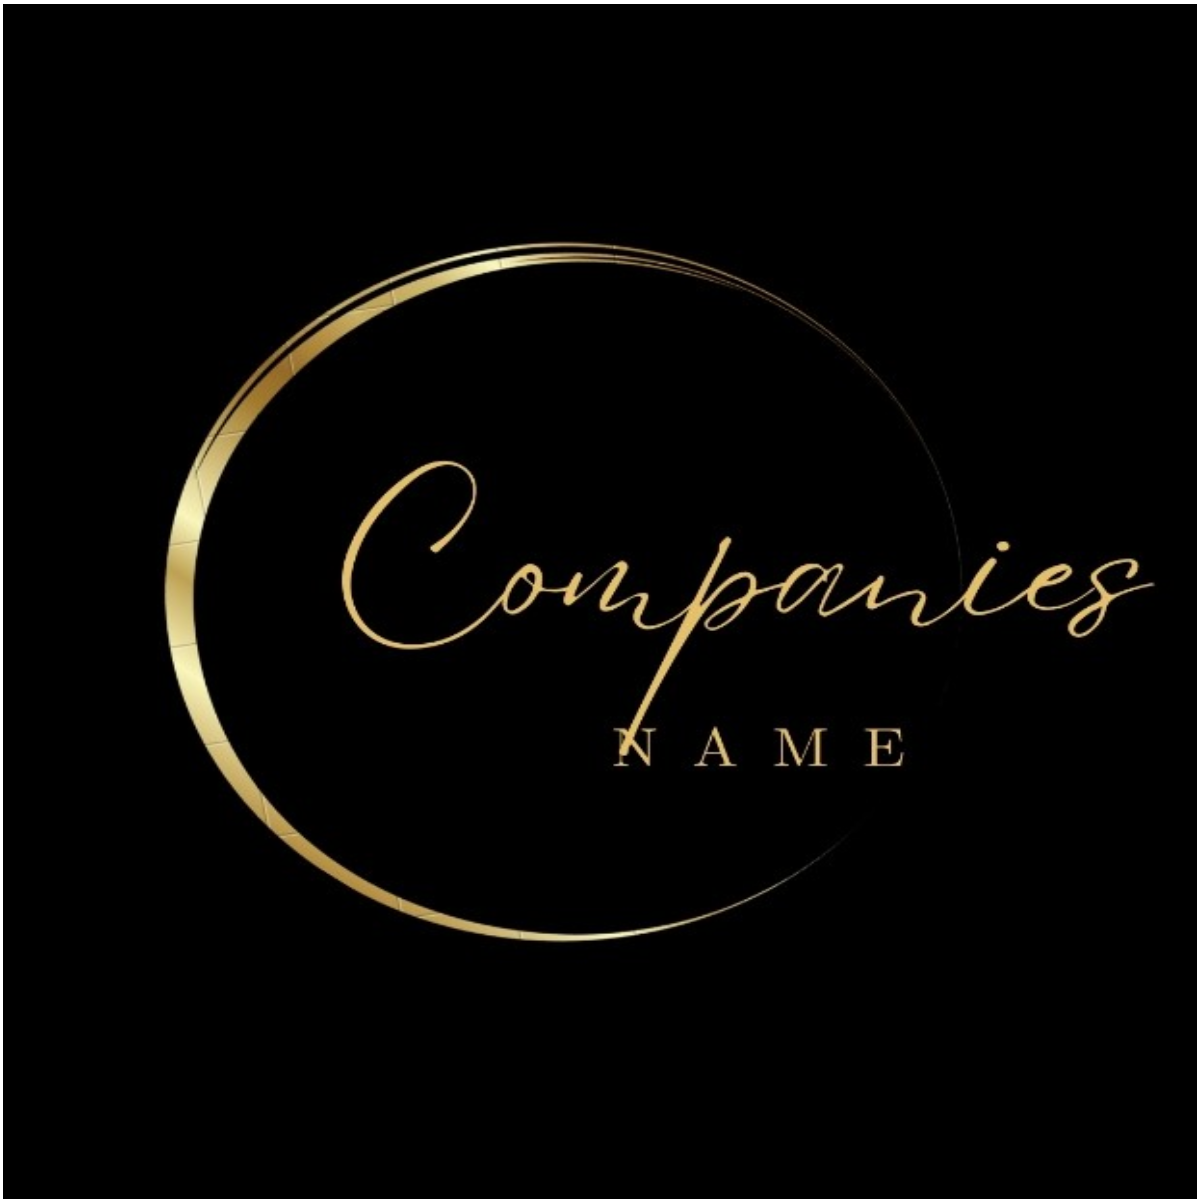 A companies logo preview image.